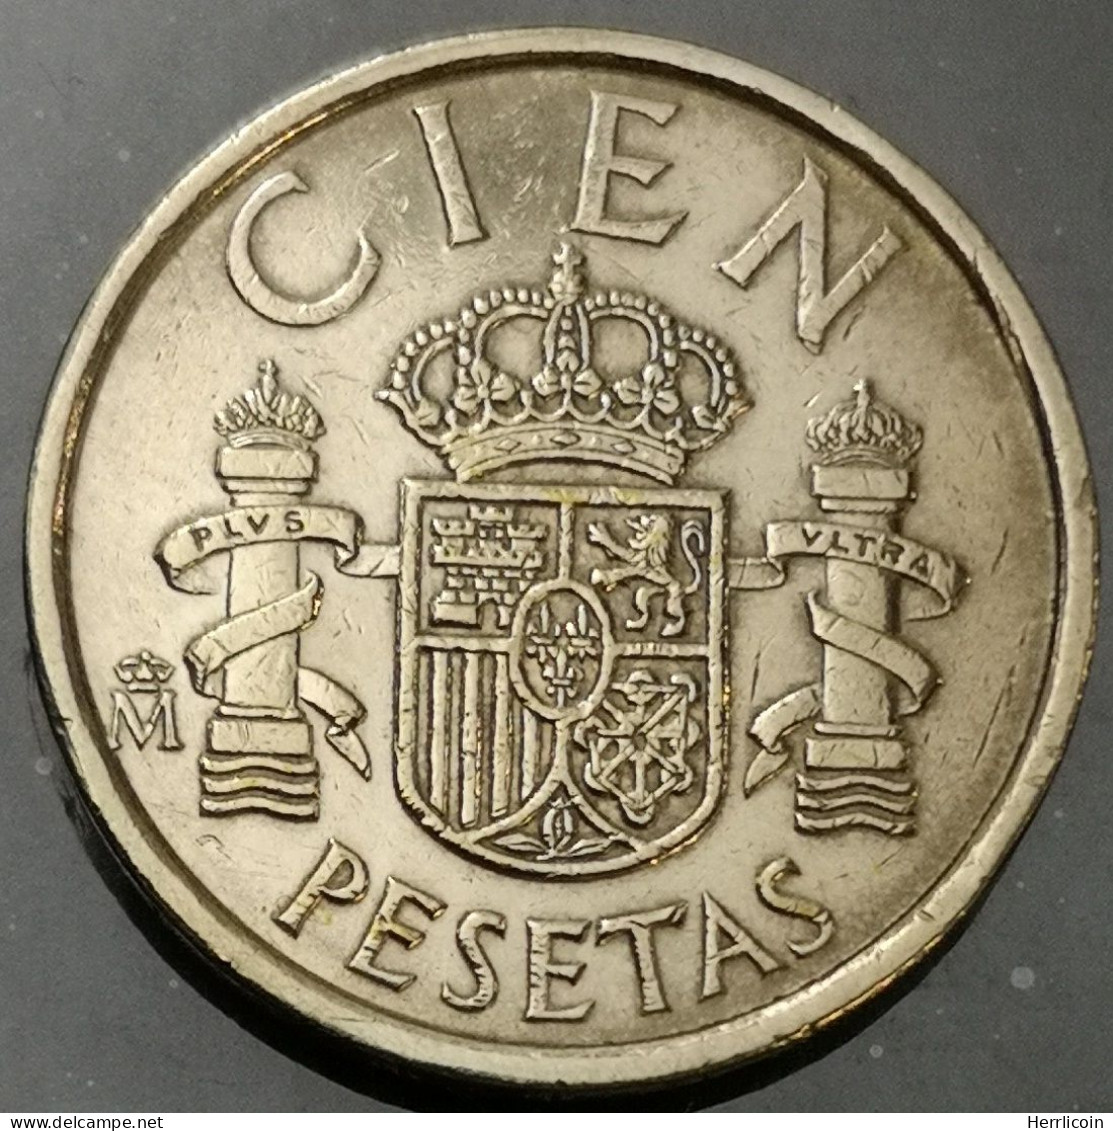 Monnaie Espagne - 1986 - 100 Pesetas Modéle CIEN (Tranche A) - 5 Pesetas